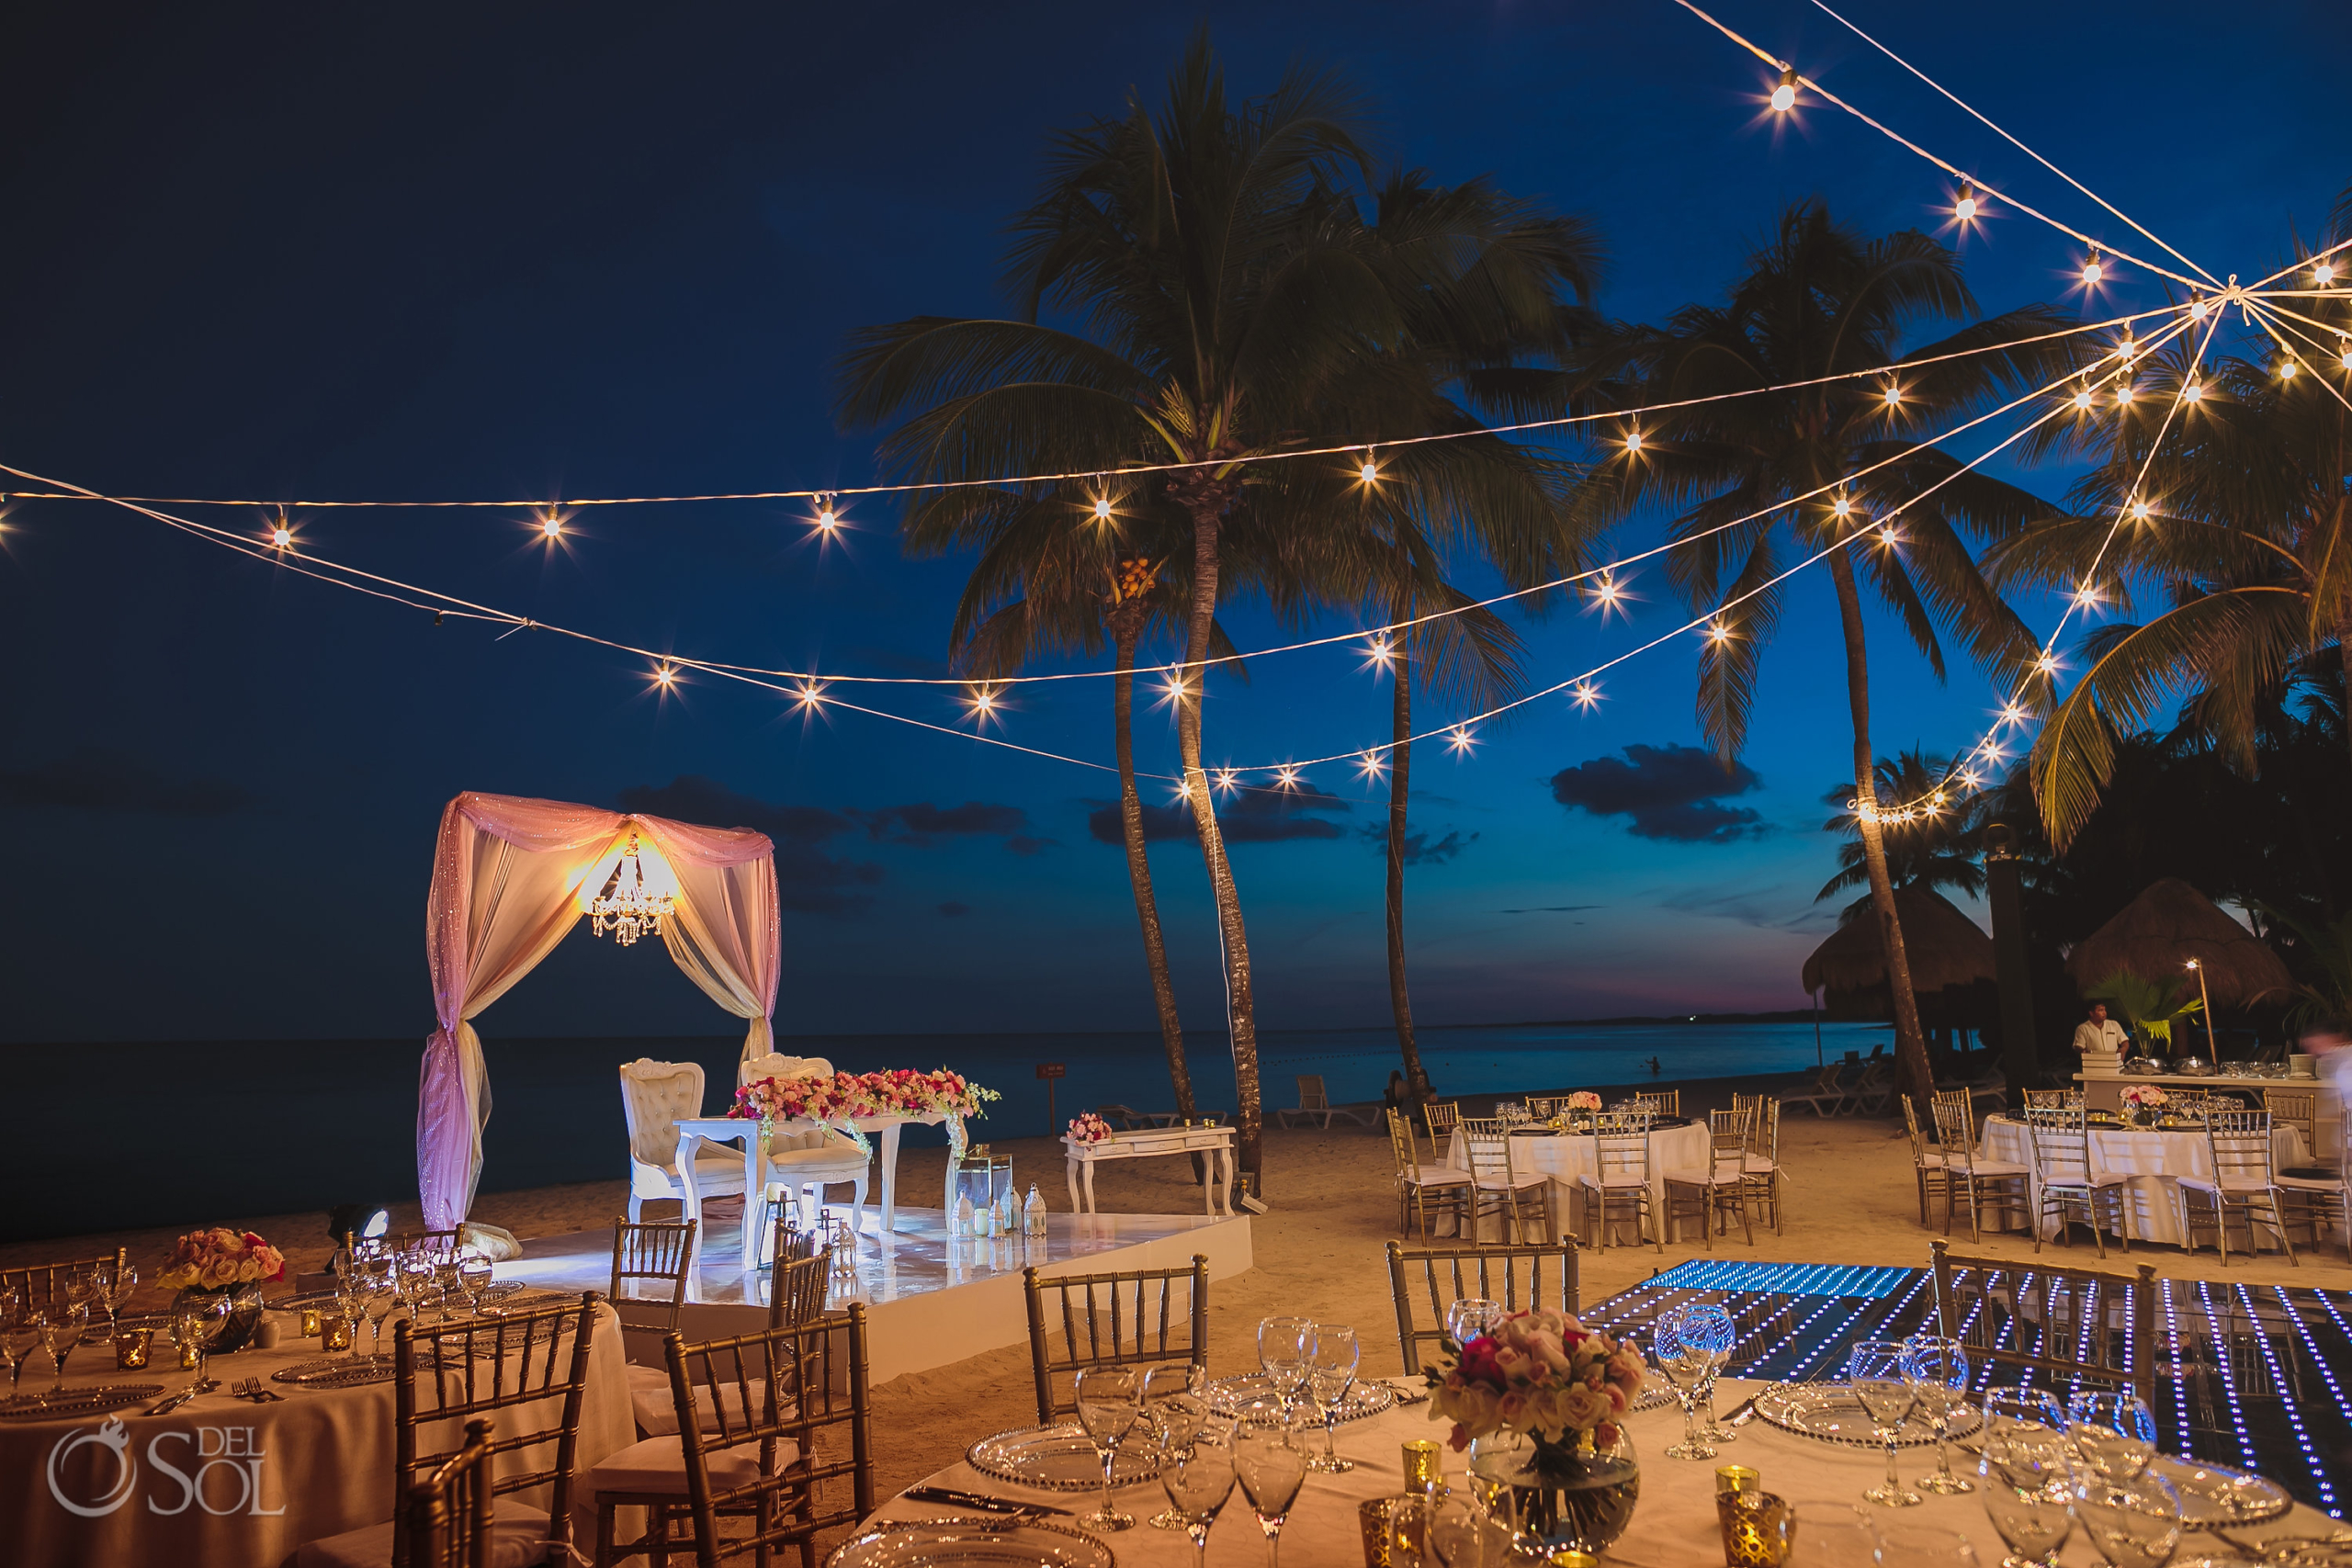 Dreams Tulum central beach Wedding reception set up